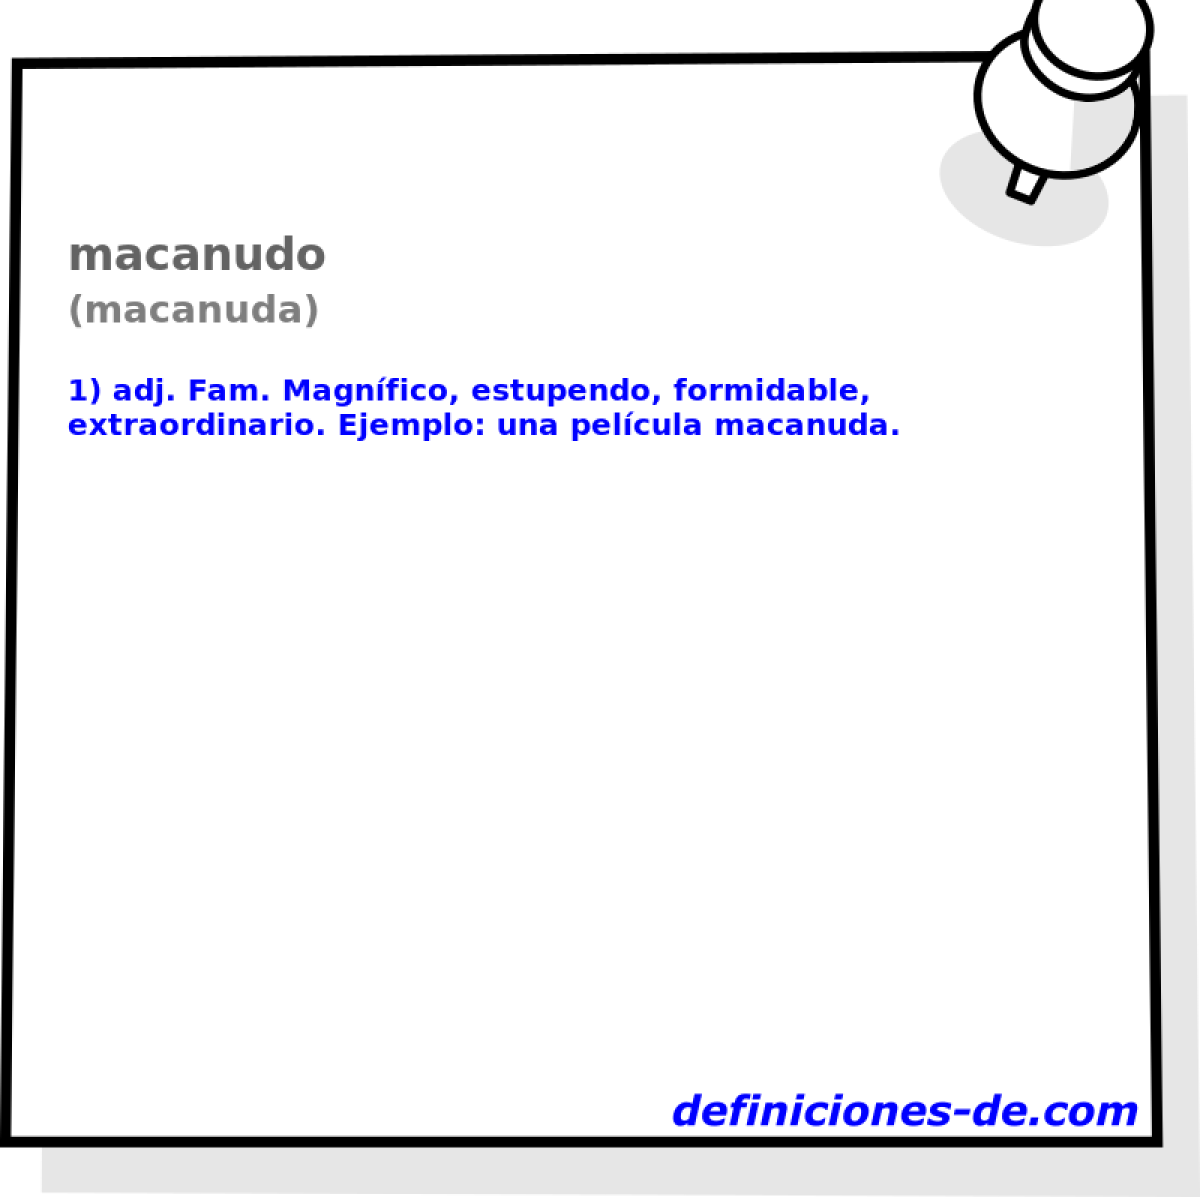 macanudo (macanuda)